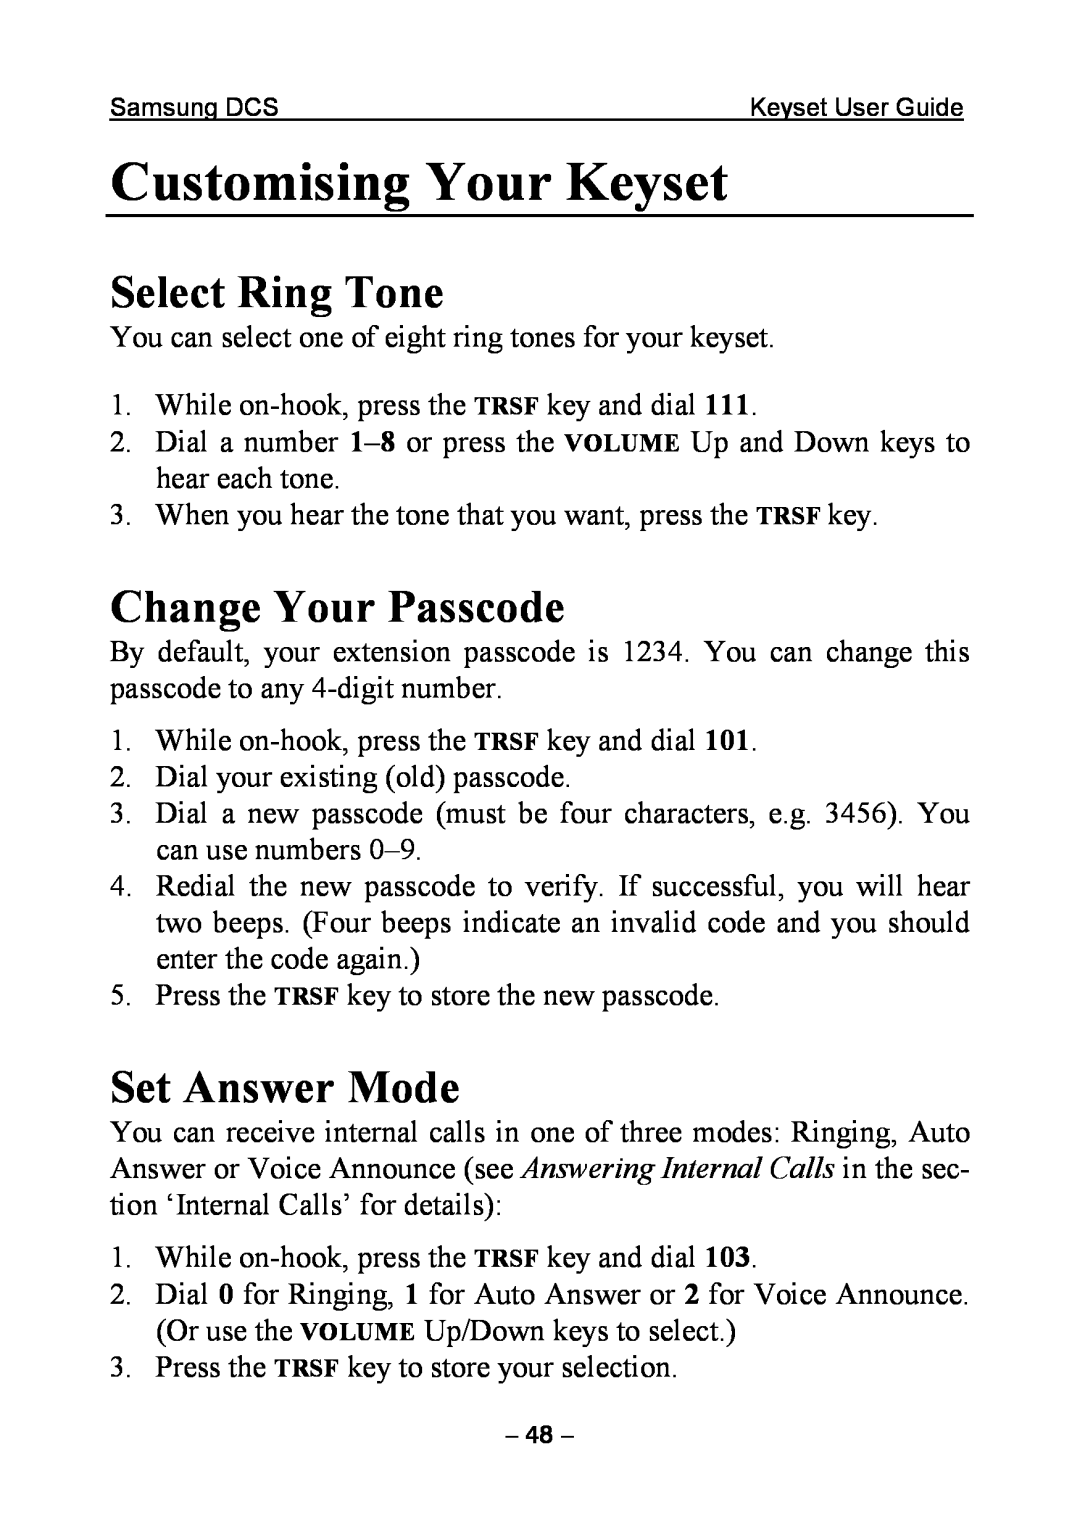 Samsung DCS KEYSET manual Customising Your Keyset, Select Ring Tone, Change Your Passcode, Set Answer Mode 